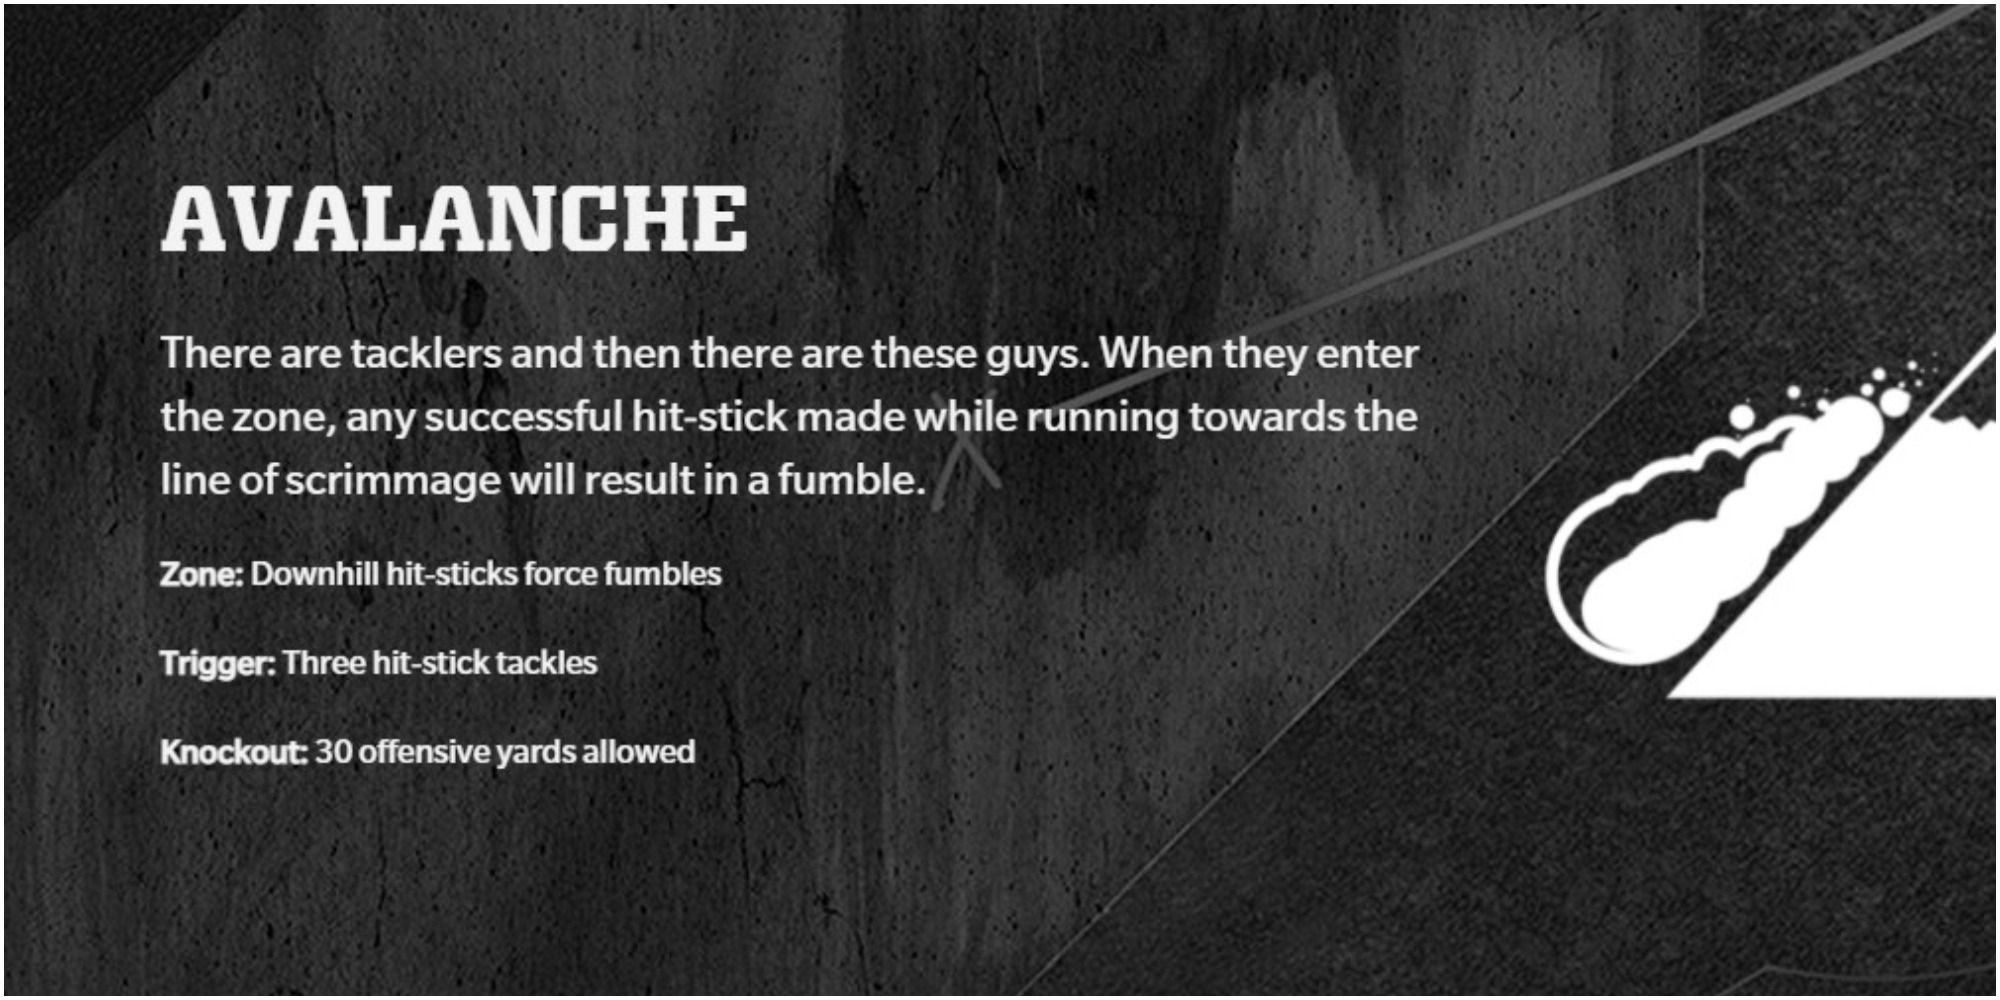 Madden NFL 22 Avalanche Description On The Website